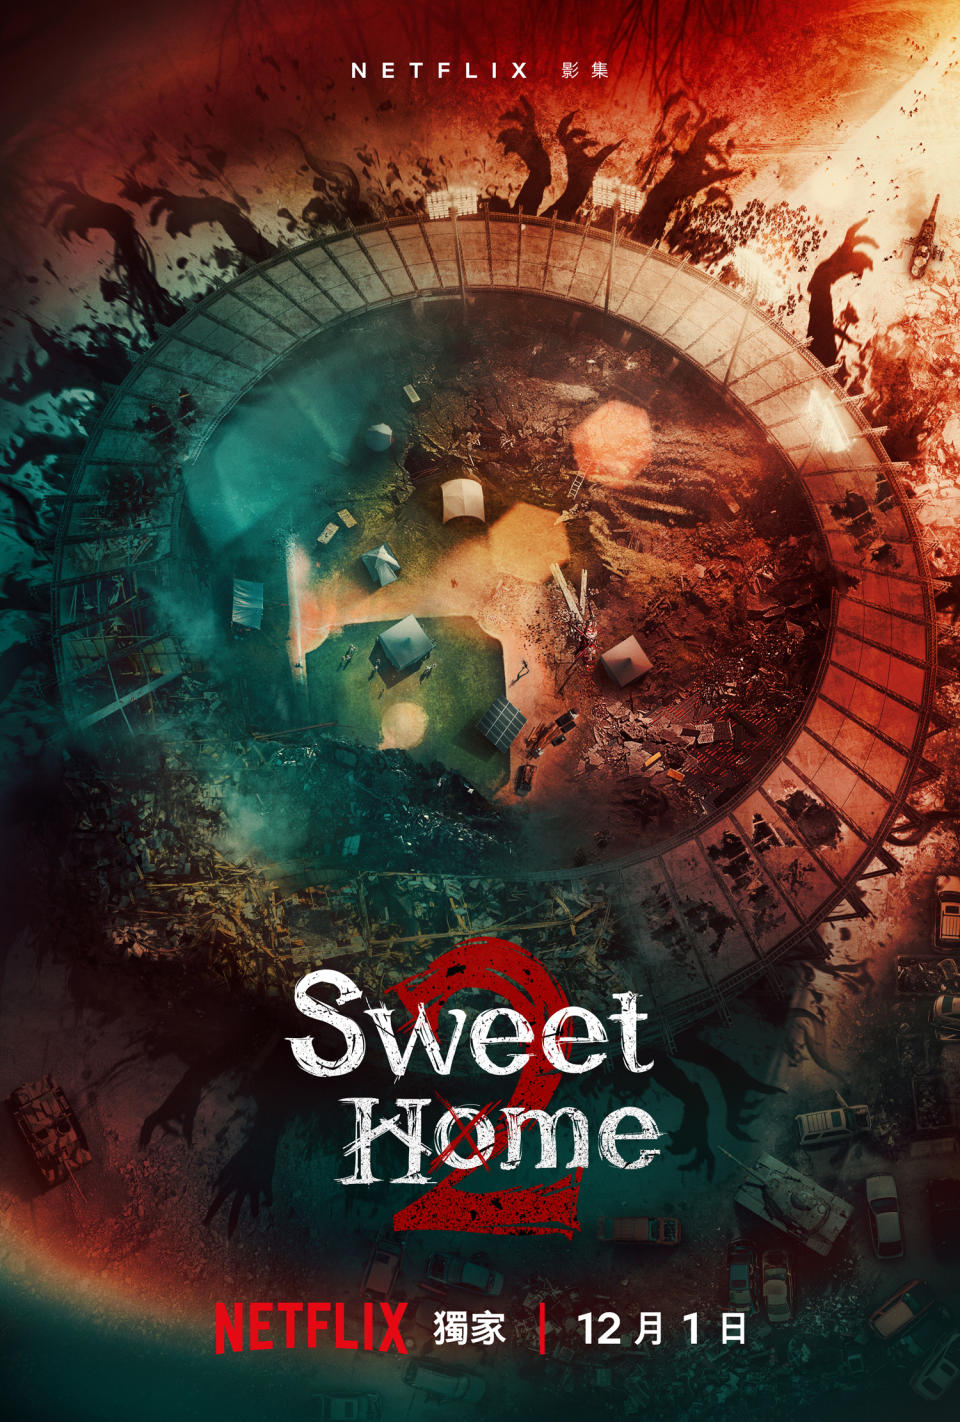 《Sweet Home》第2季劇情將從海報中的體育場展開。（Netflix提供）